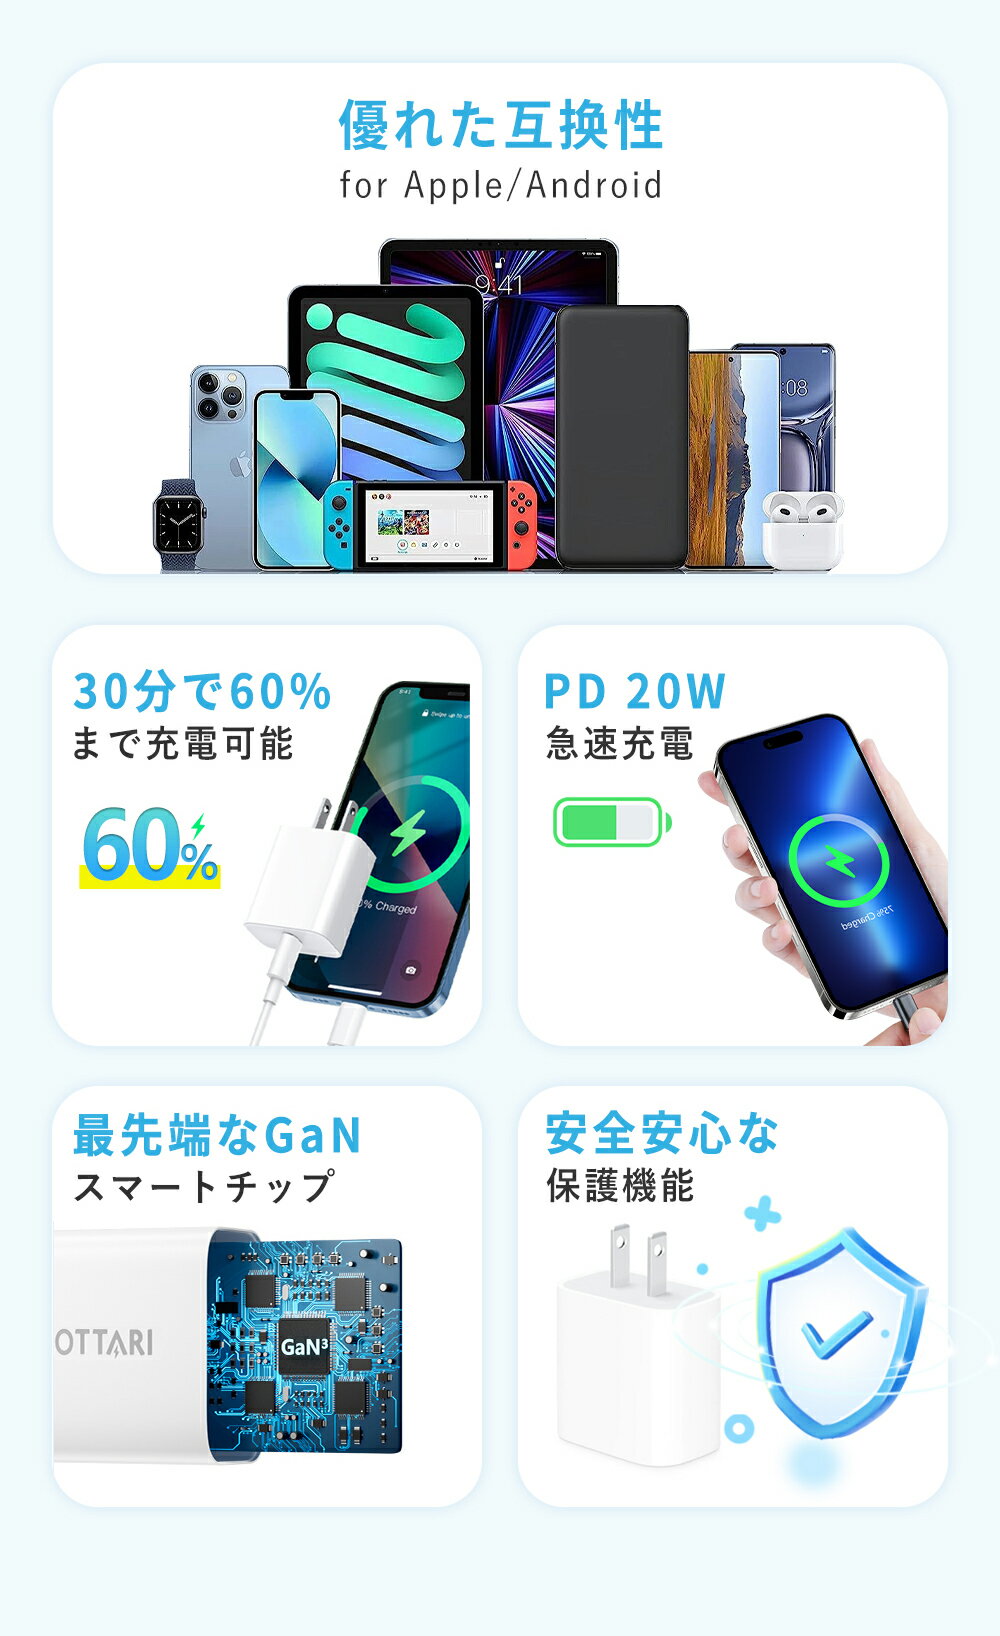 【新規店超低価格!】iphone 充電器 iP...の紹介画像3